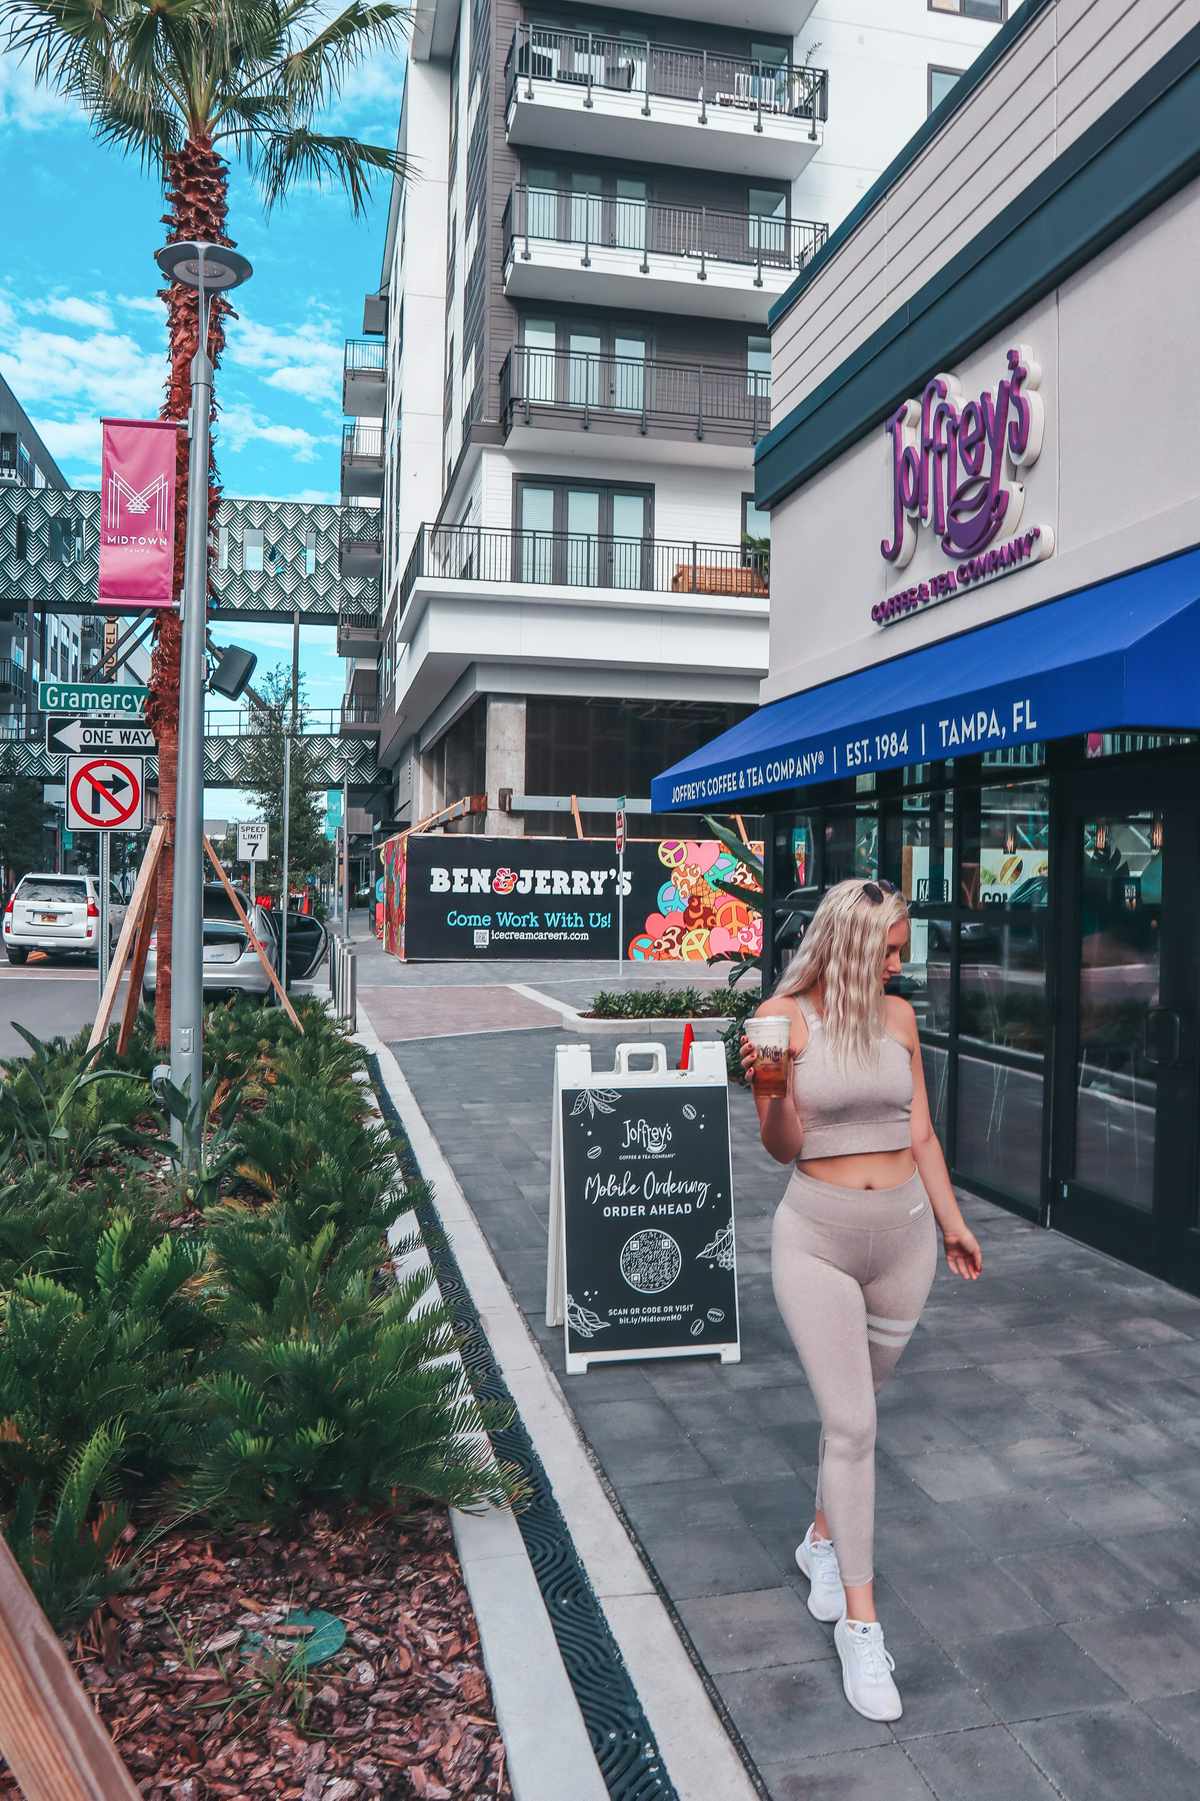 Joffreys Coffee Shop in Midtown Tampa